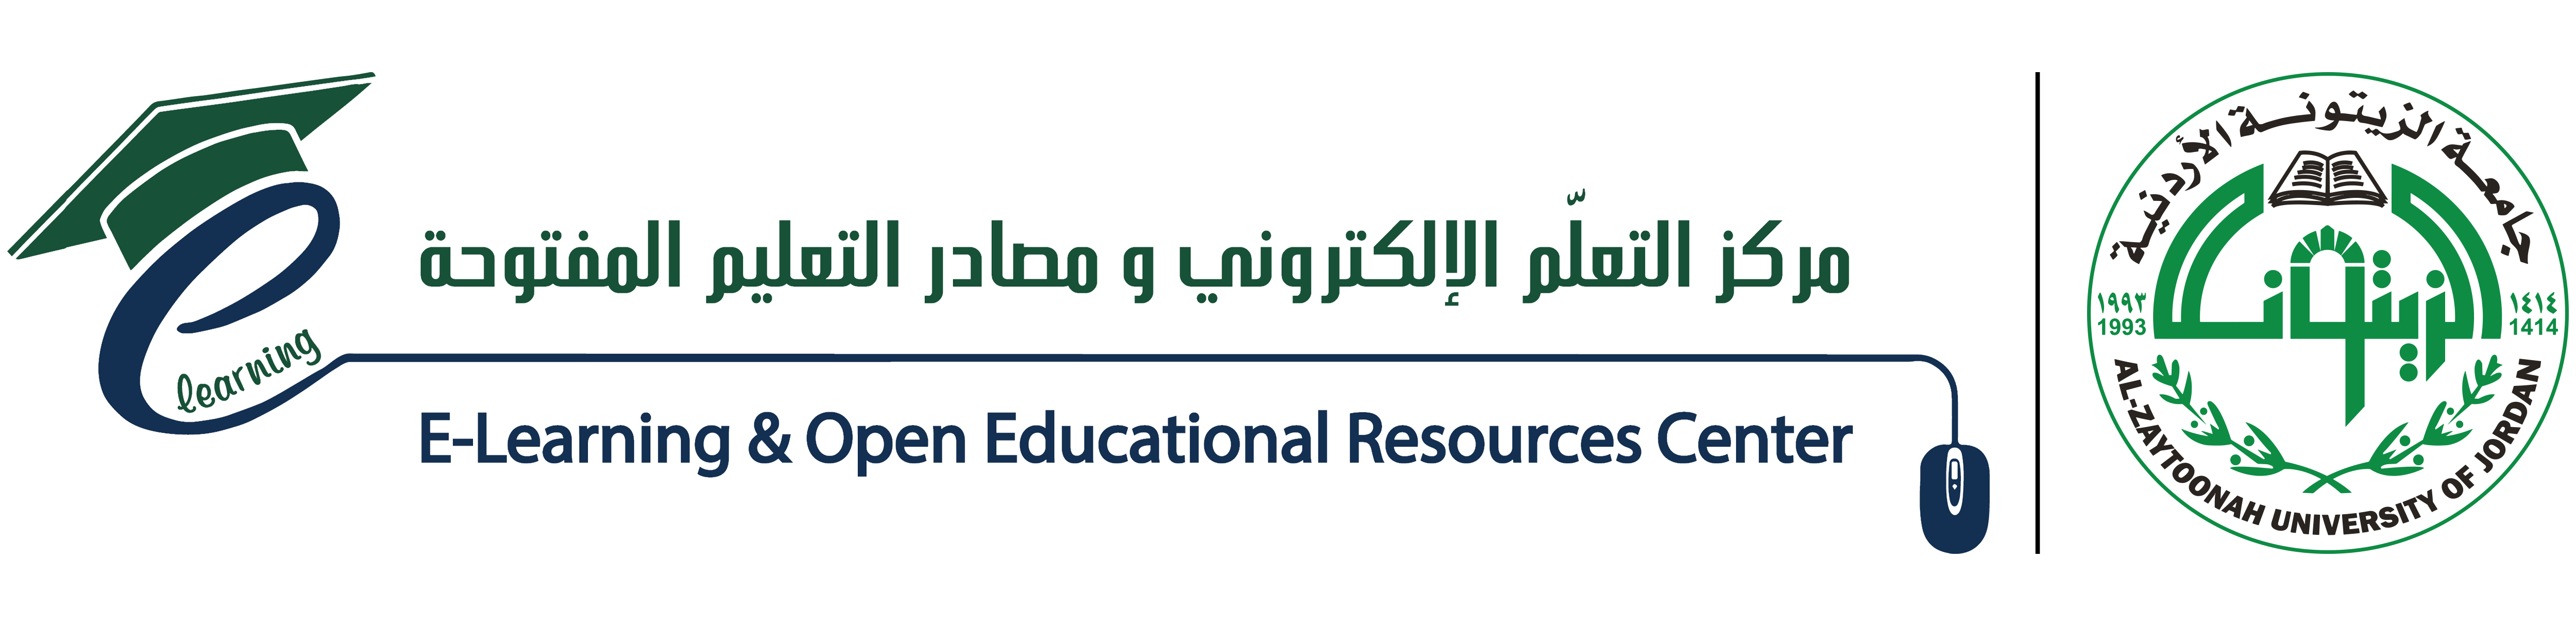  Al-Zaytoonah University of Jordan E-Learning Portal